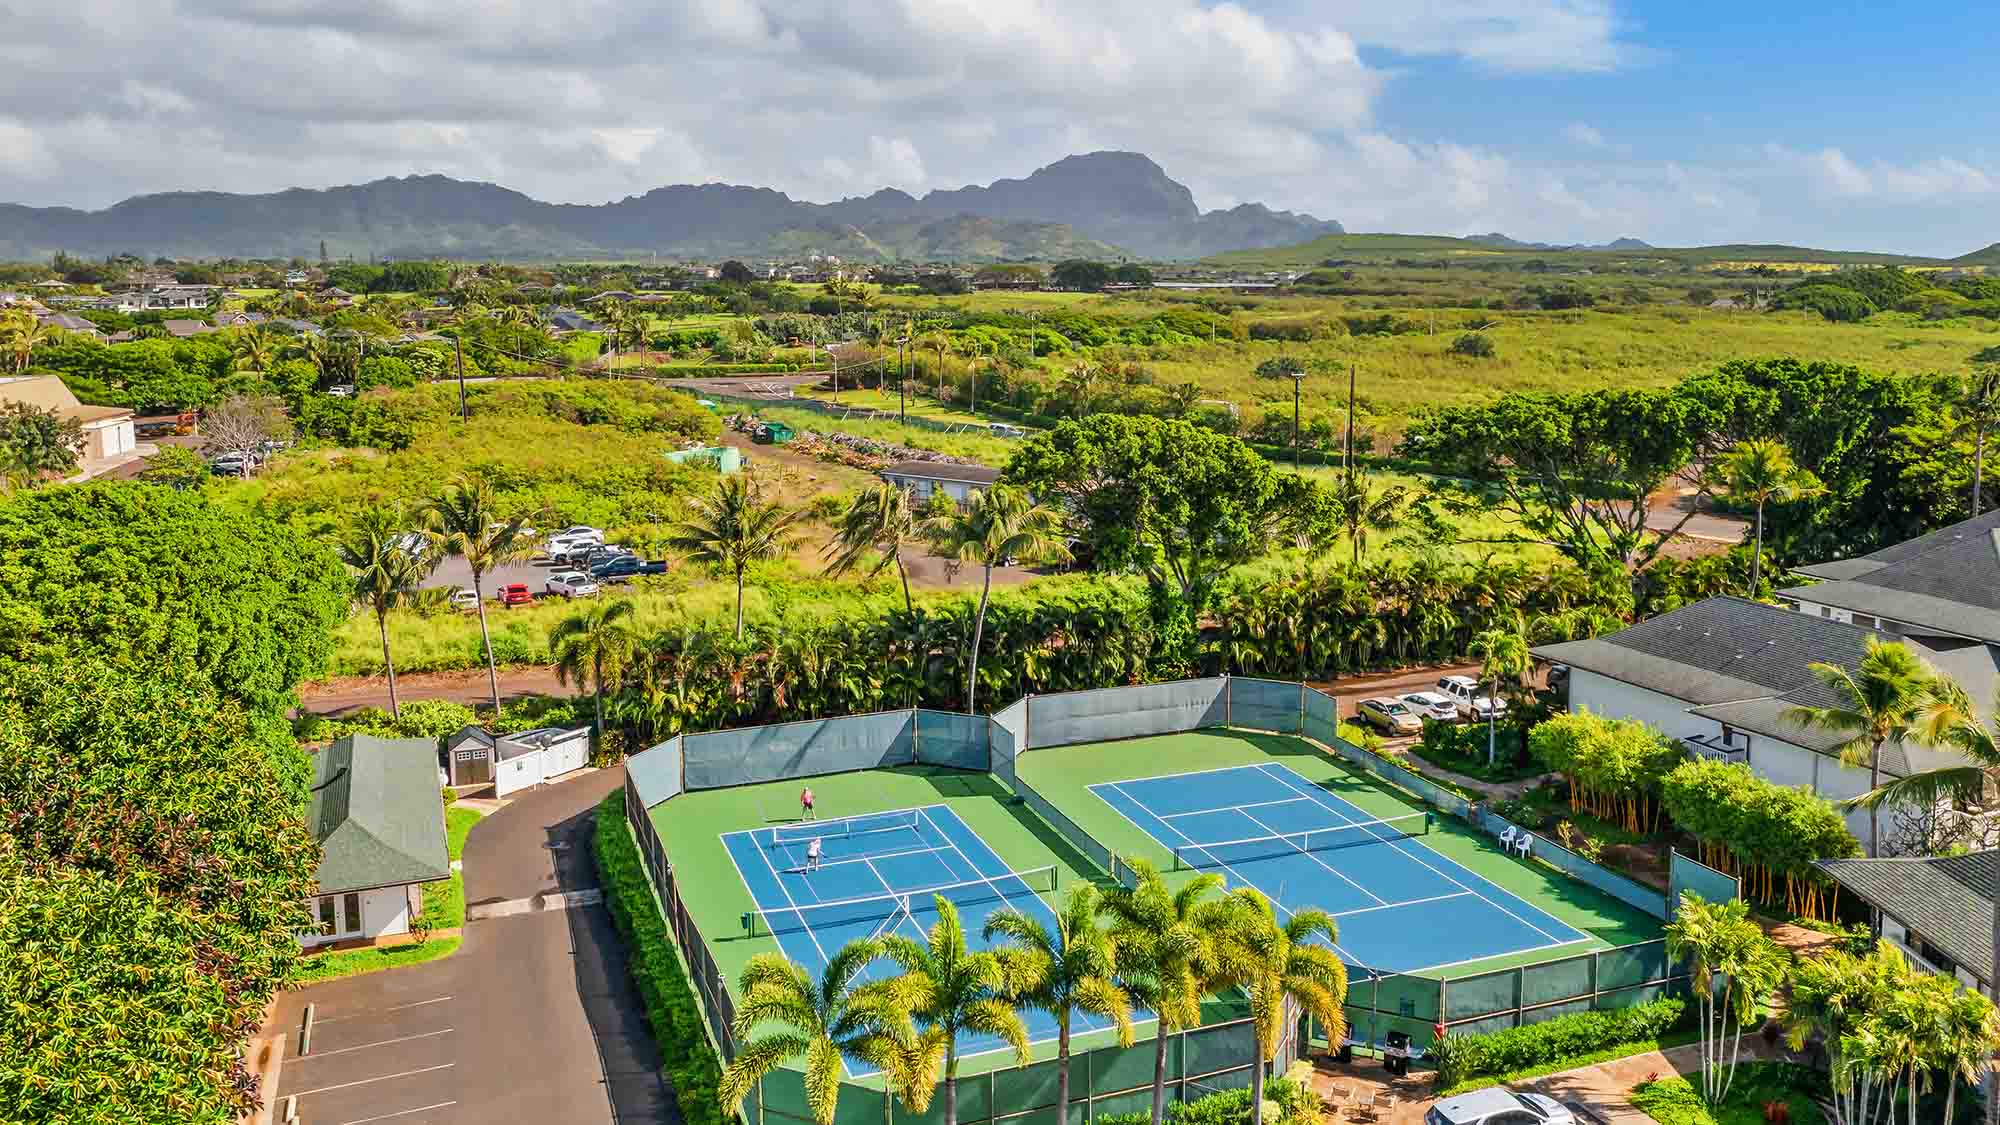 Poipu Kapili Resort - Tennis & Pickleball Courts - Parrish Kauai